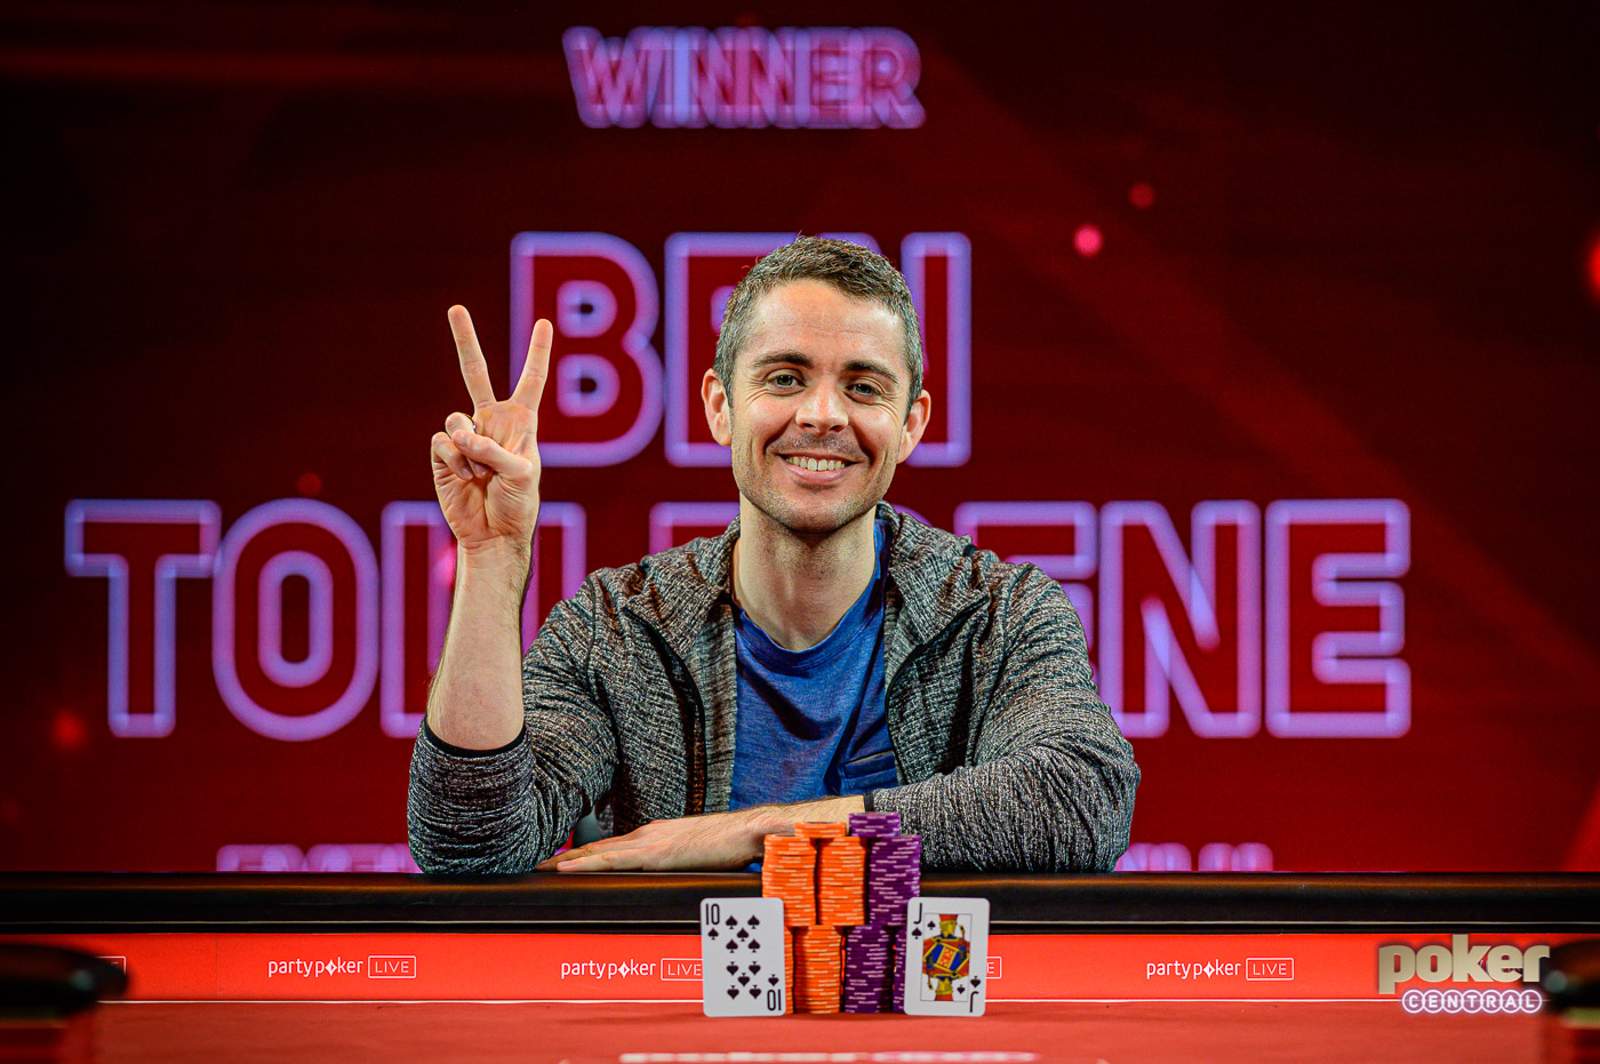 Ben Tollerene Wins Event #10 of British Poker Open for £840,000